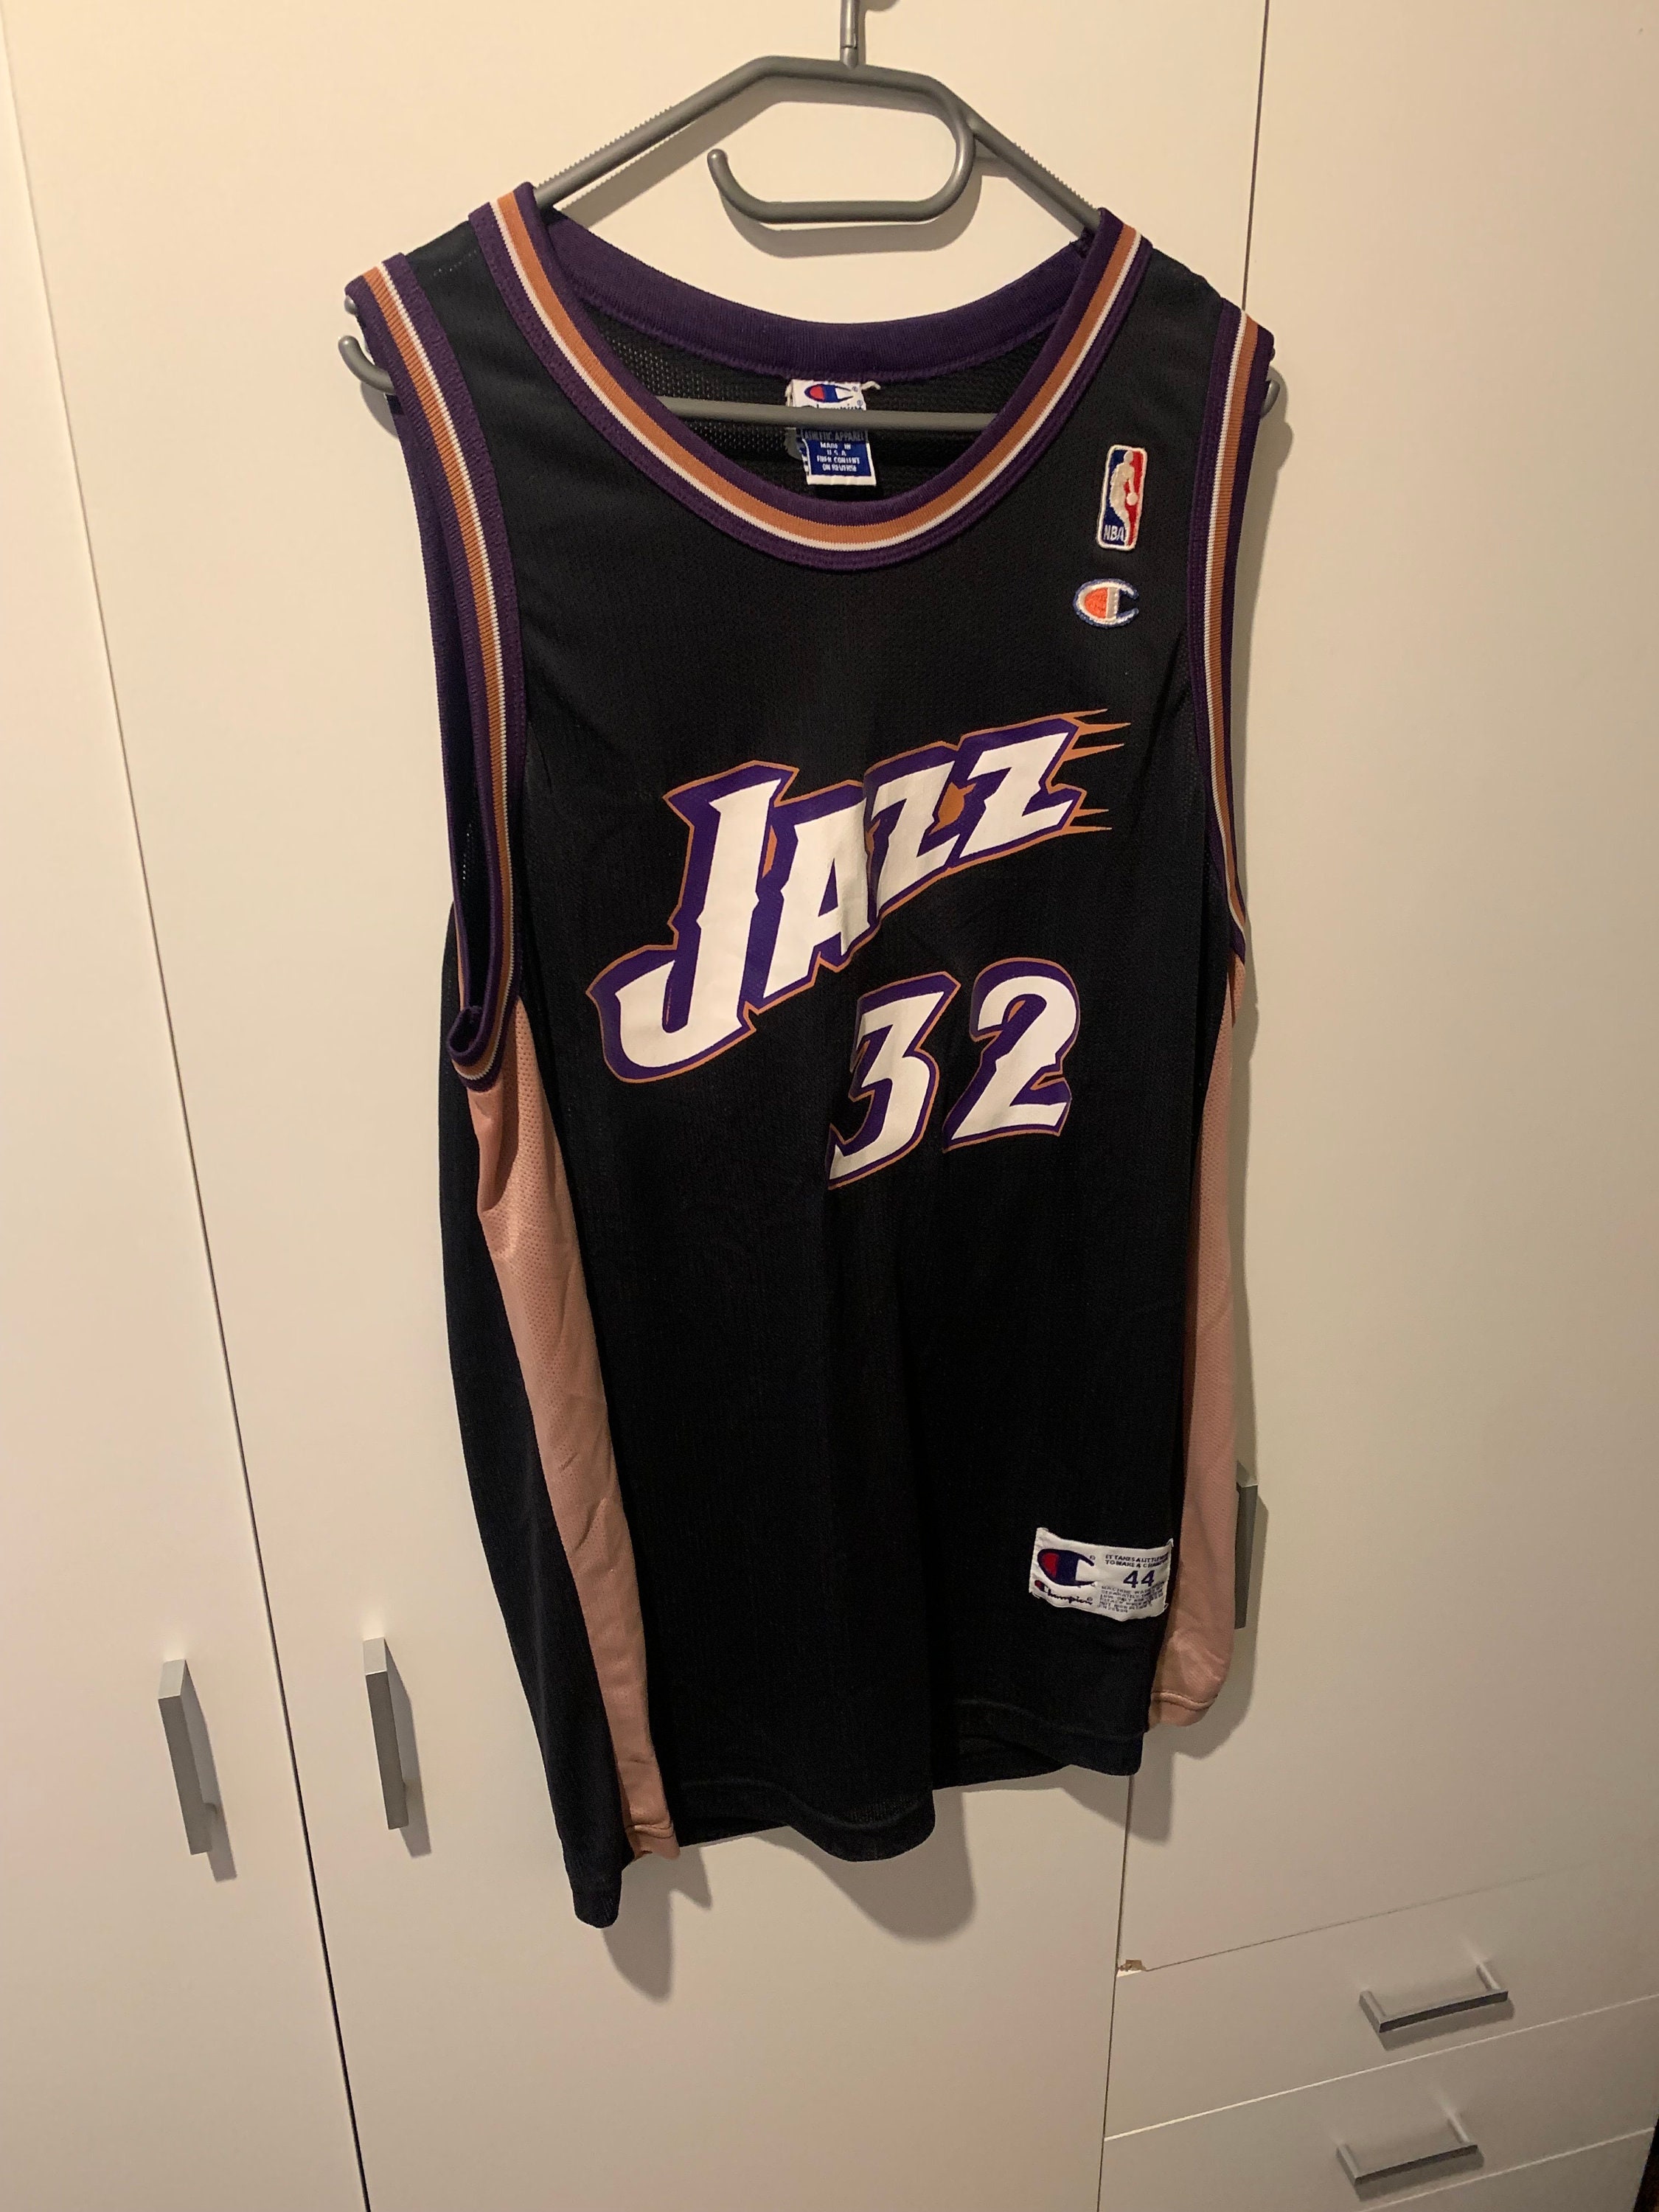 44 jazz jersey